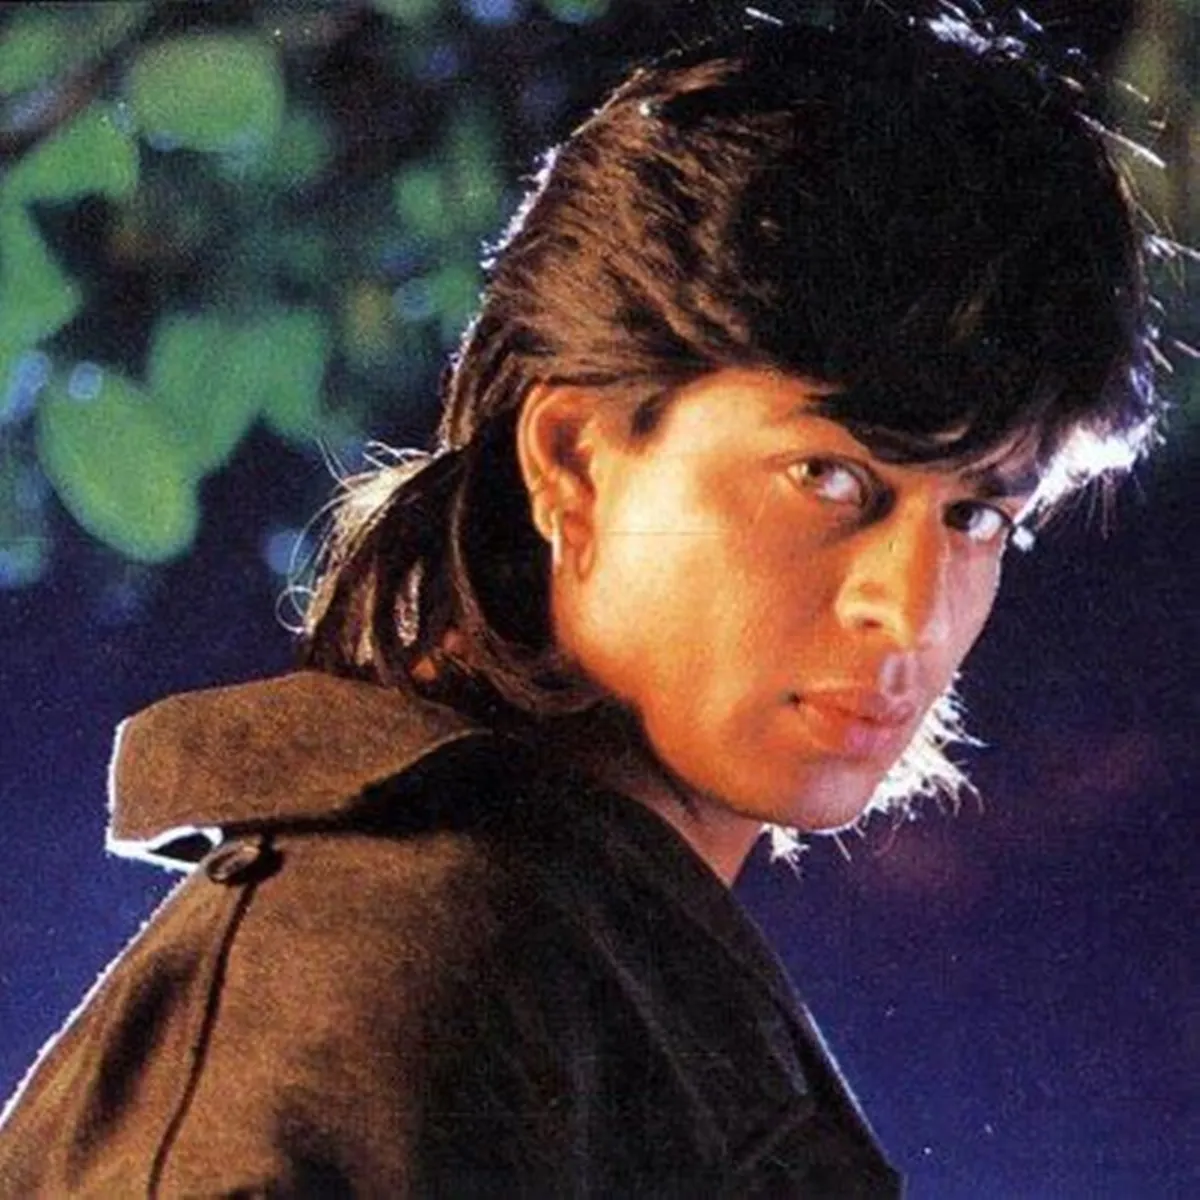 Shah Rukh Khan - Biography - IMDb